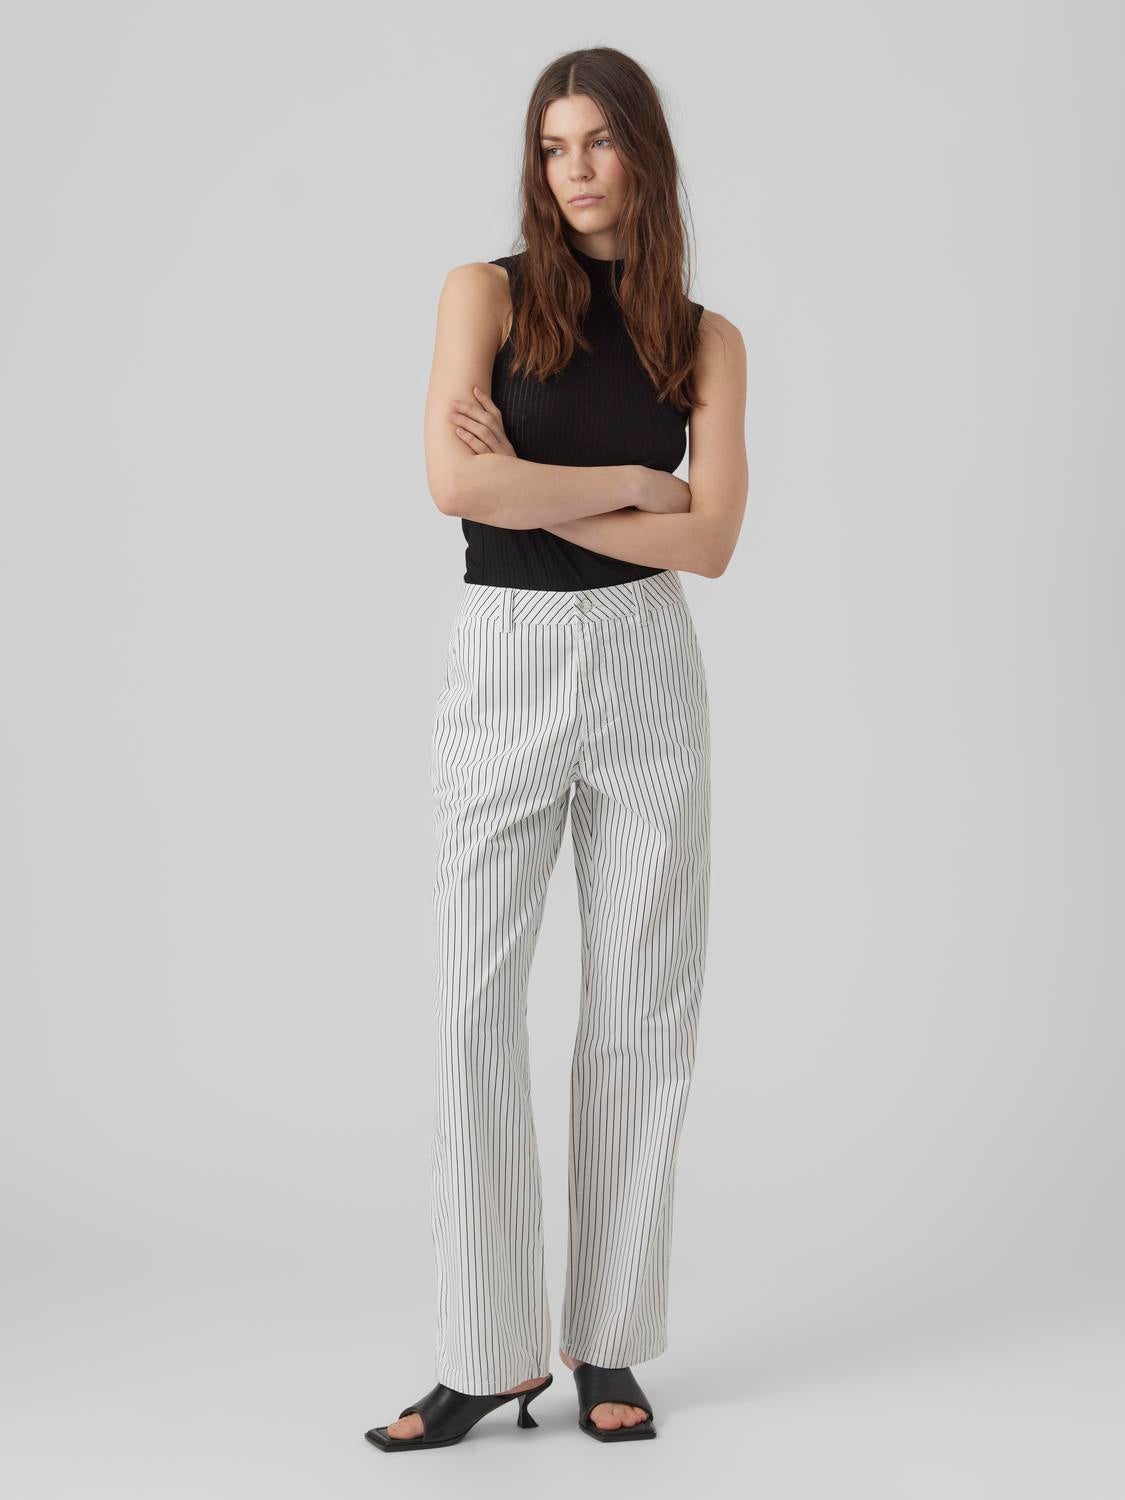 Share more than 89 vero moda white trousers latest - in.cdgdbentre